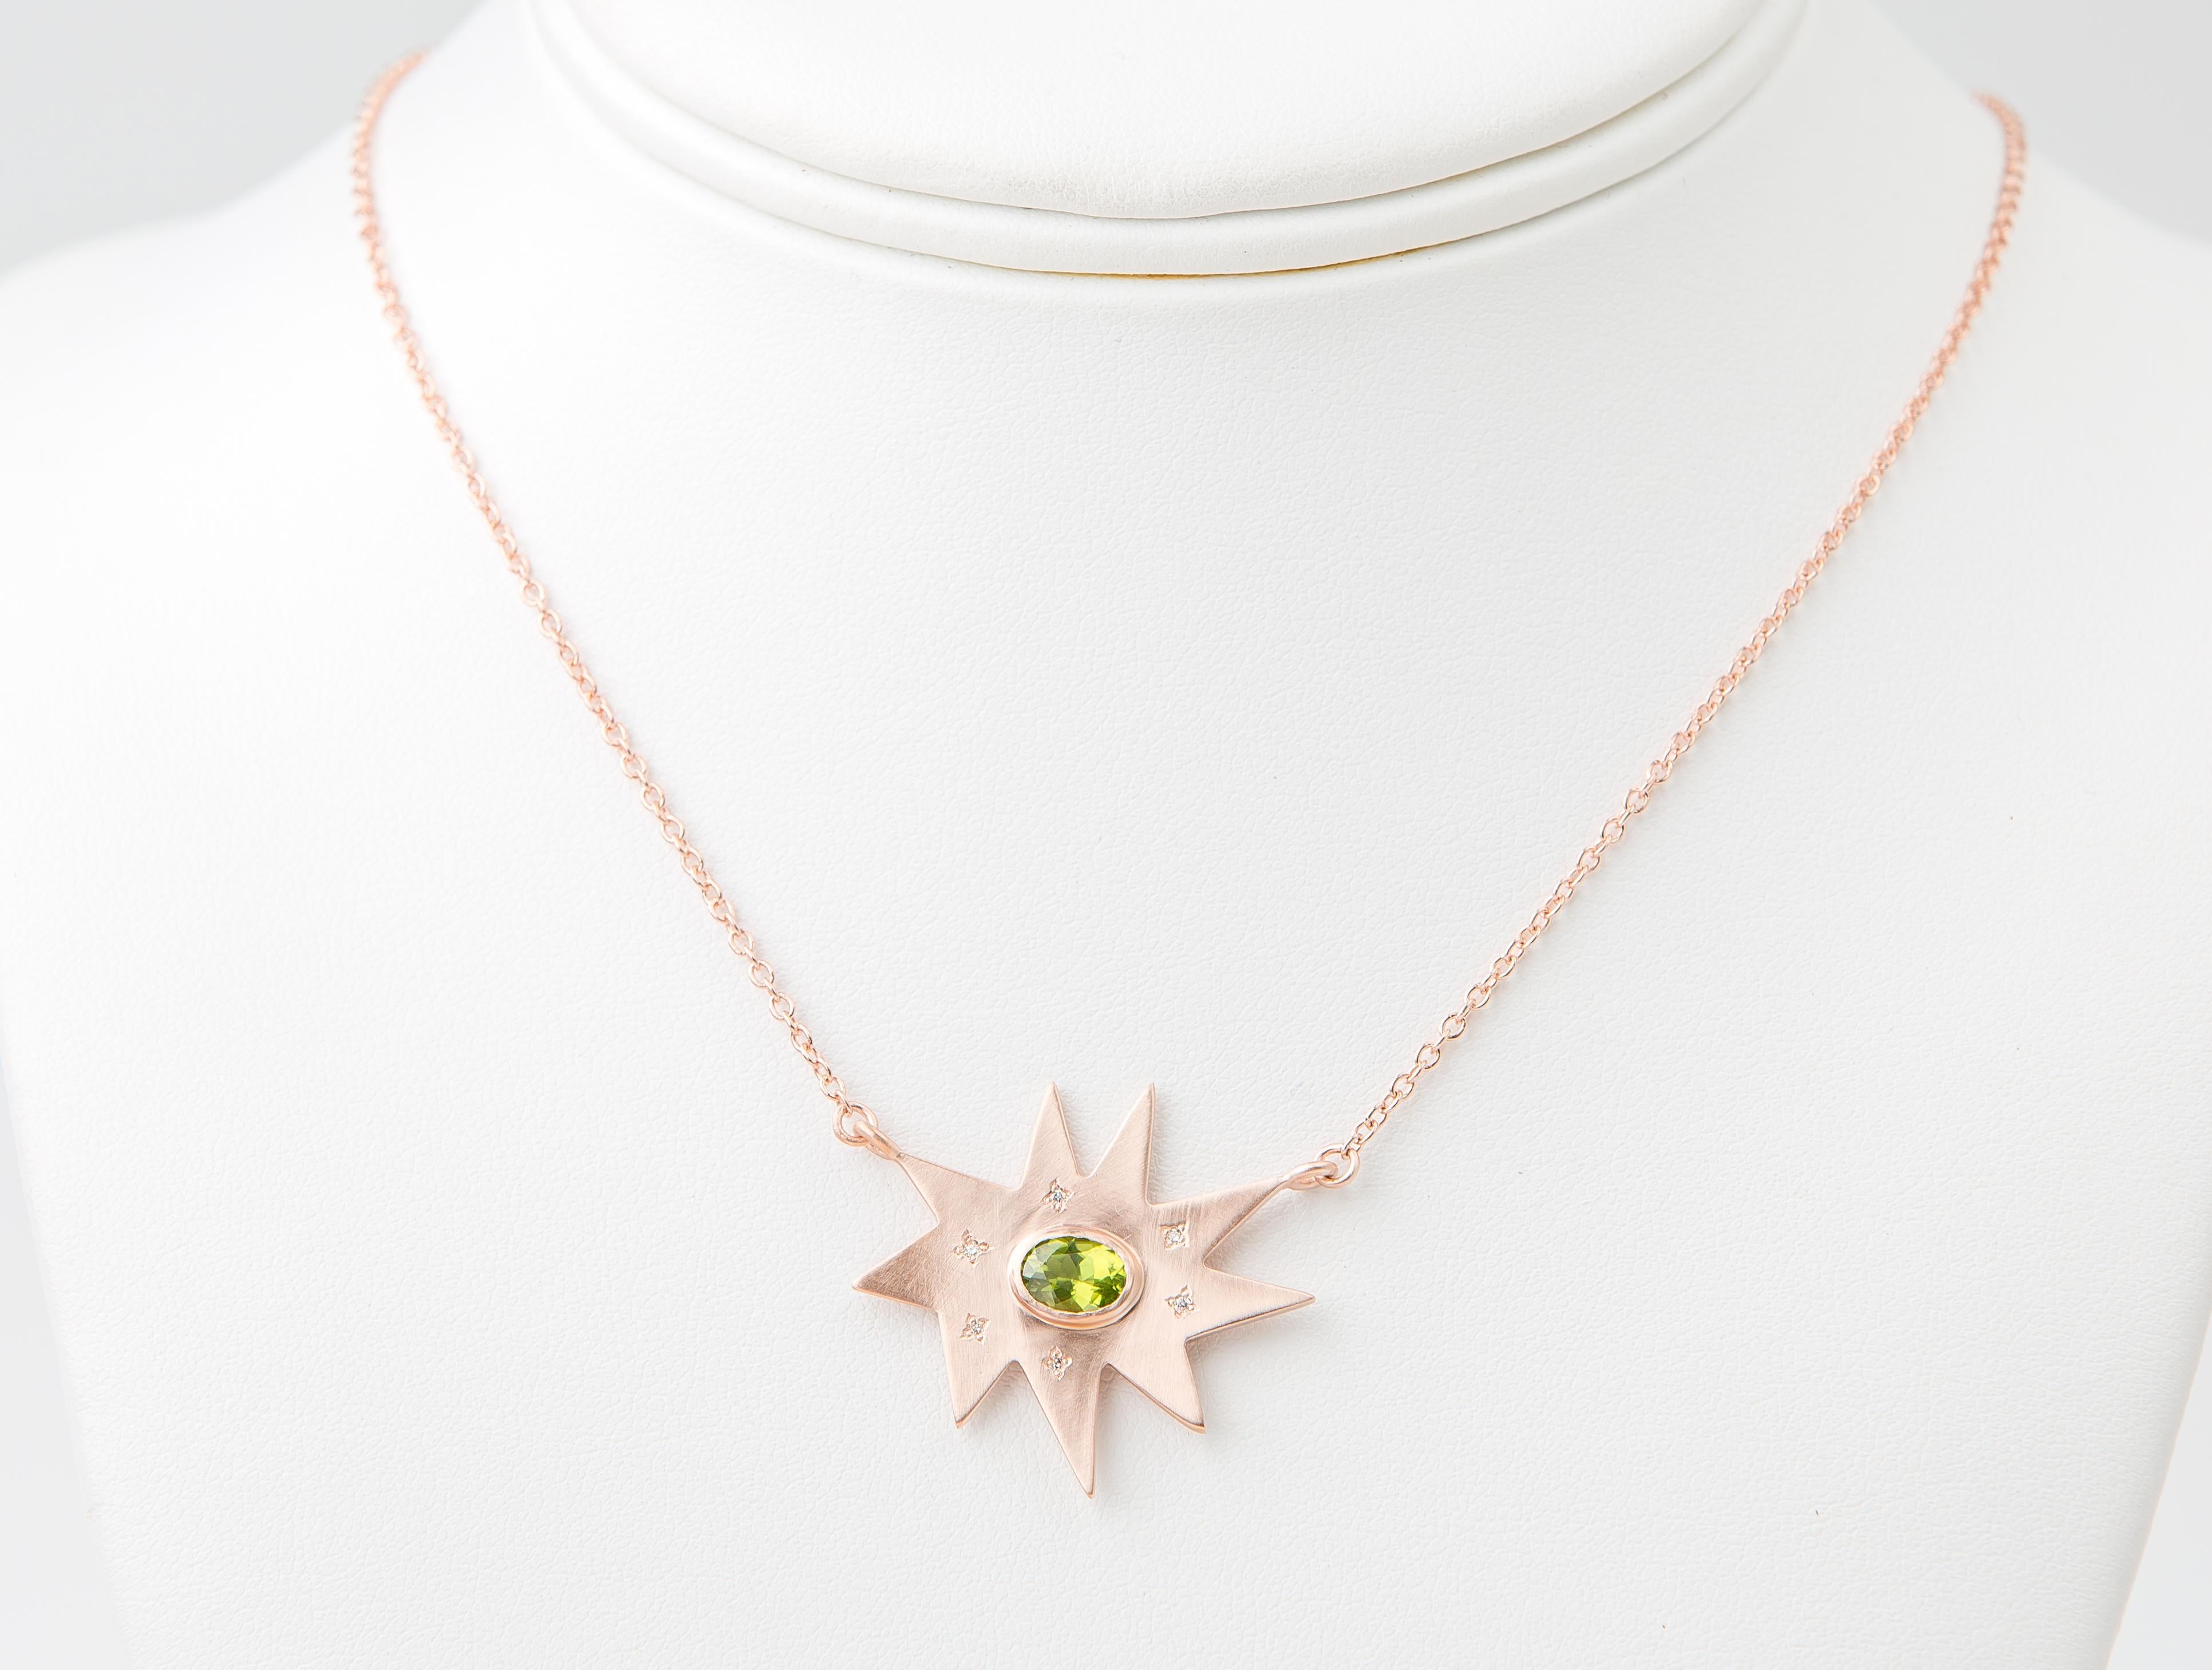 Contemporary Emily Kuvin Rose Gold, Peridot and Diamond Organic Star Shape Pendant Necklace